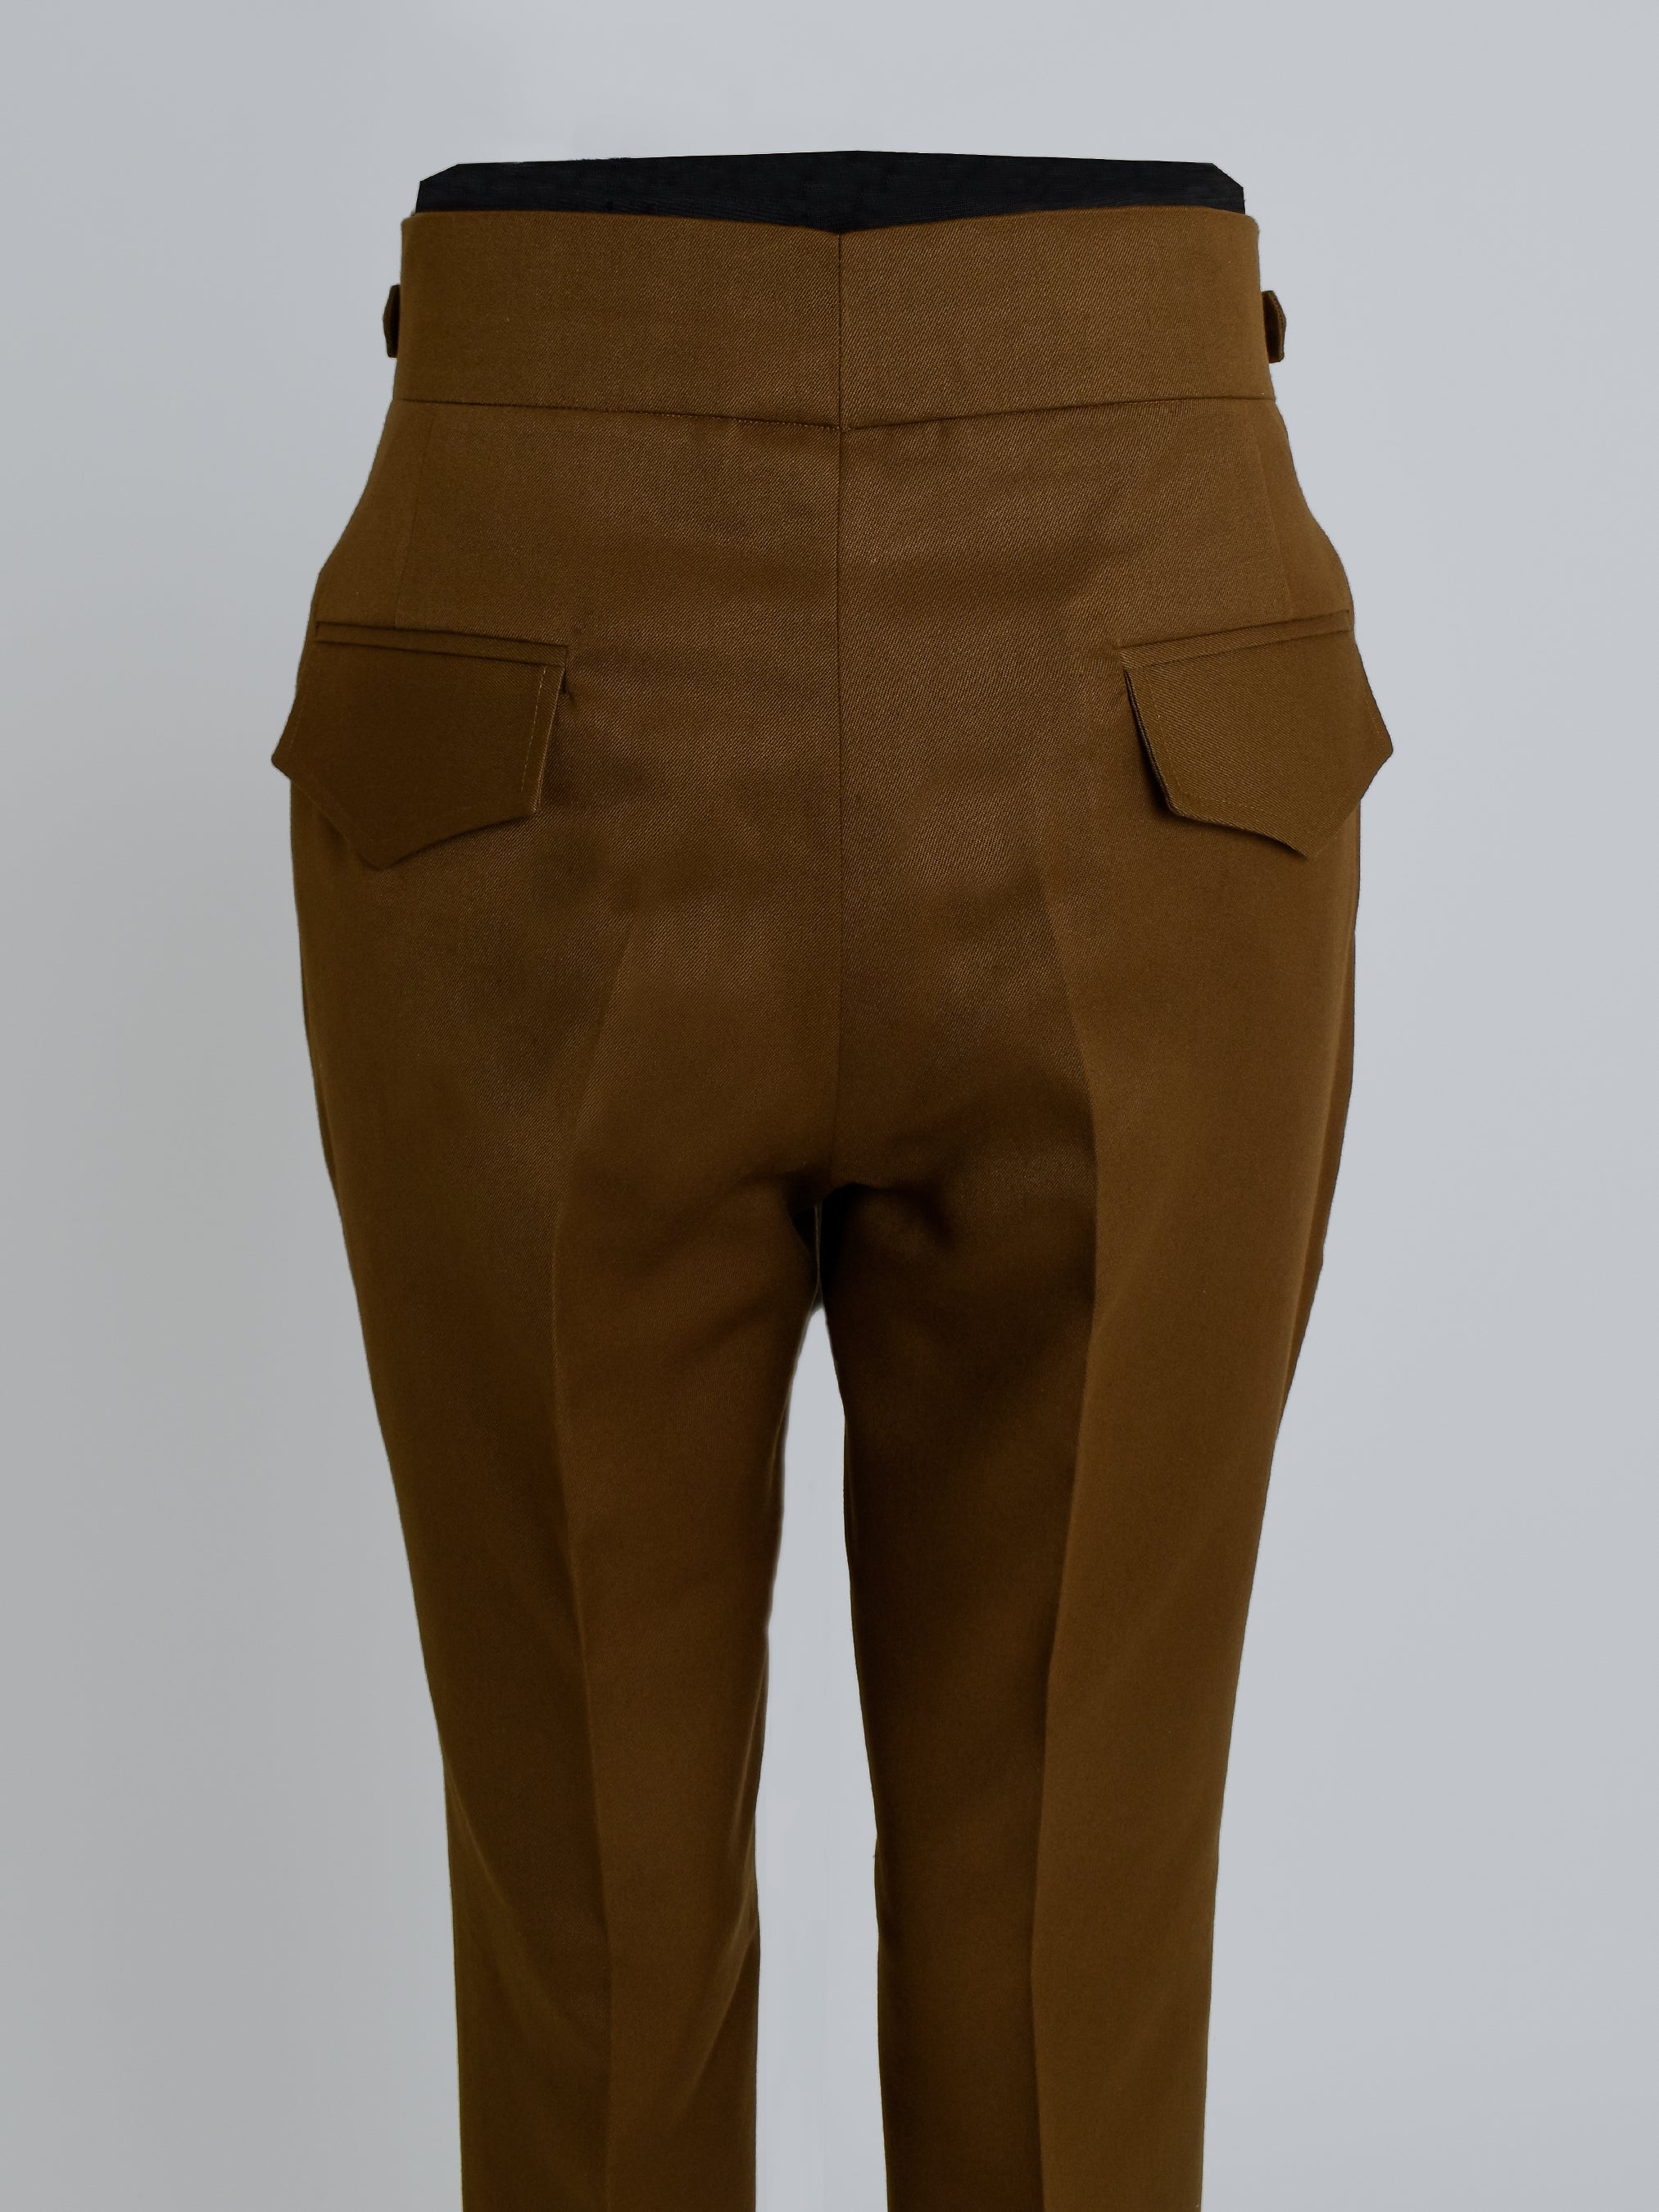 Regal Brown Corduroy Pant